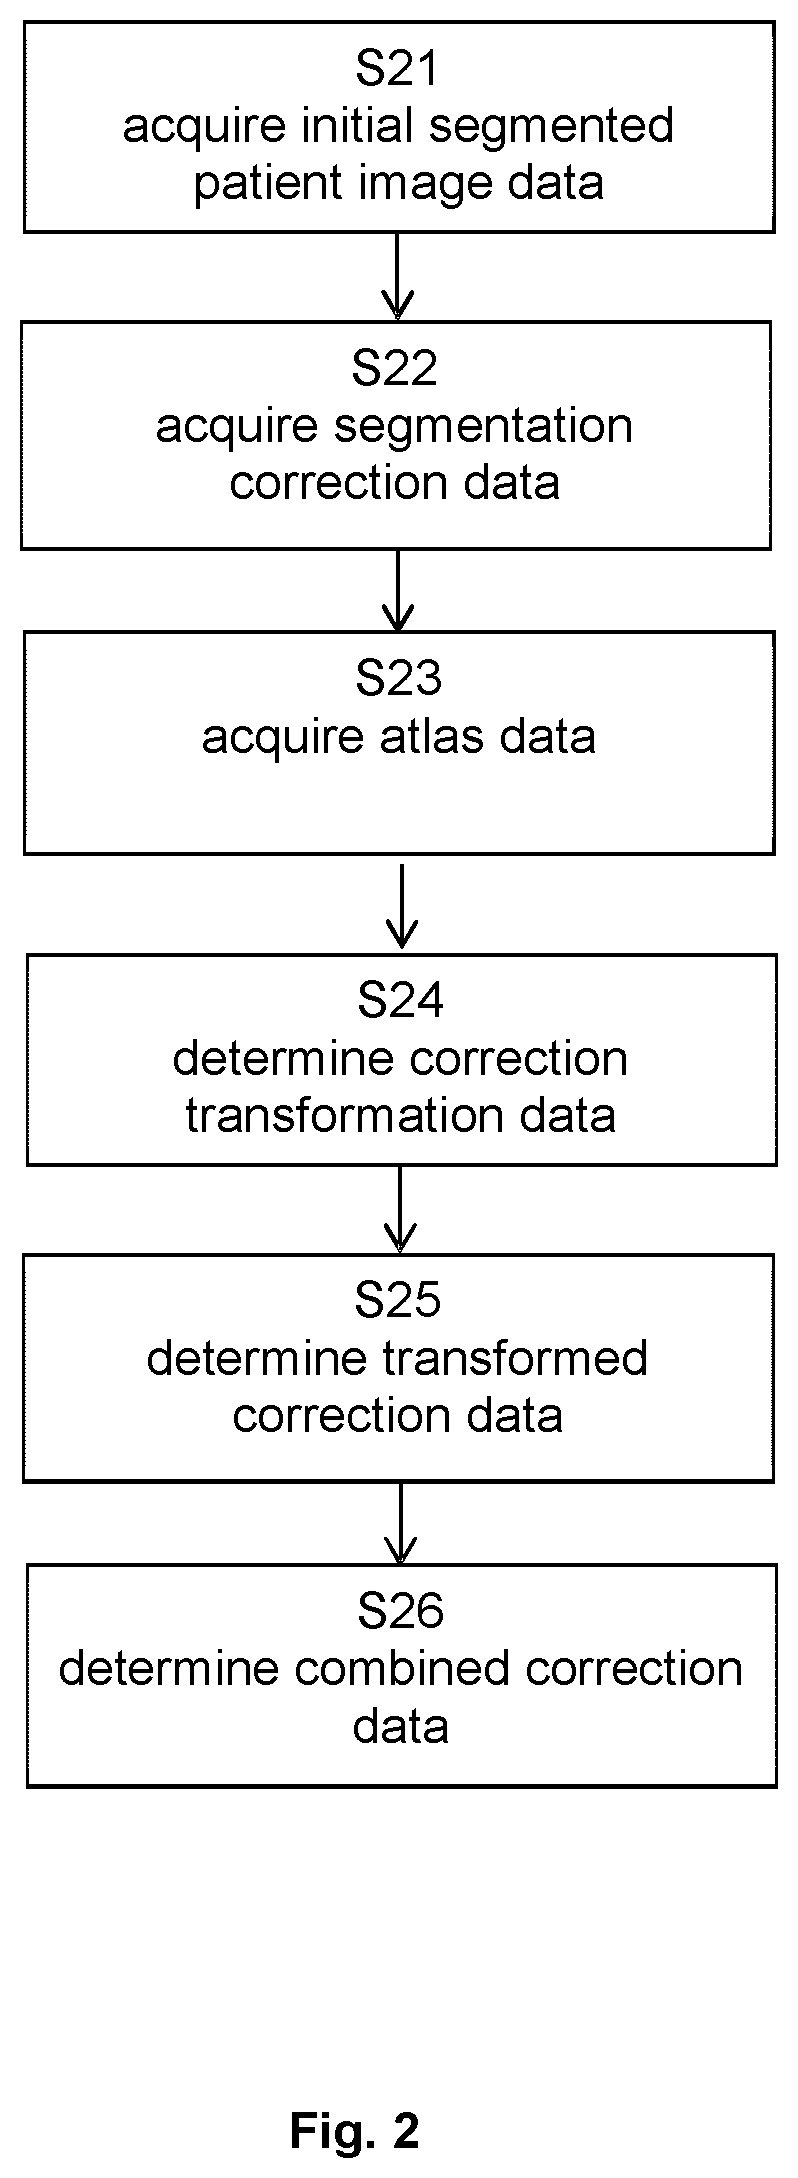 Correcting segmentation of medical images using a statistical analysis of historic corrections